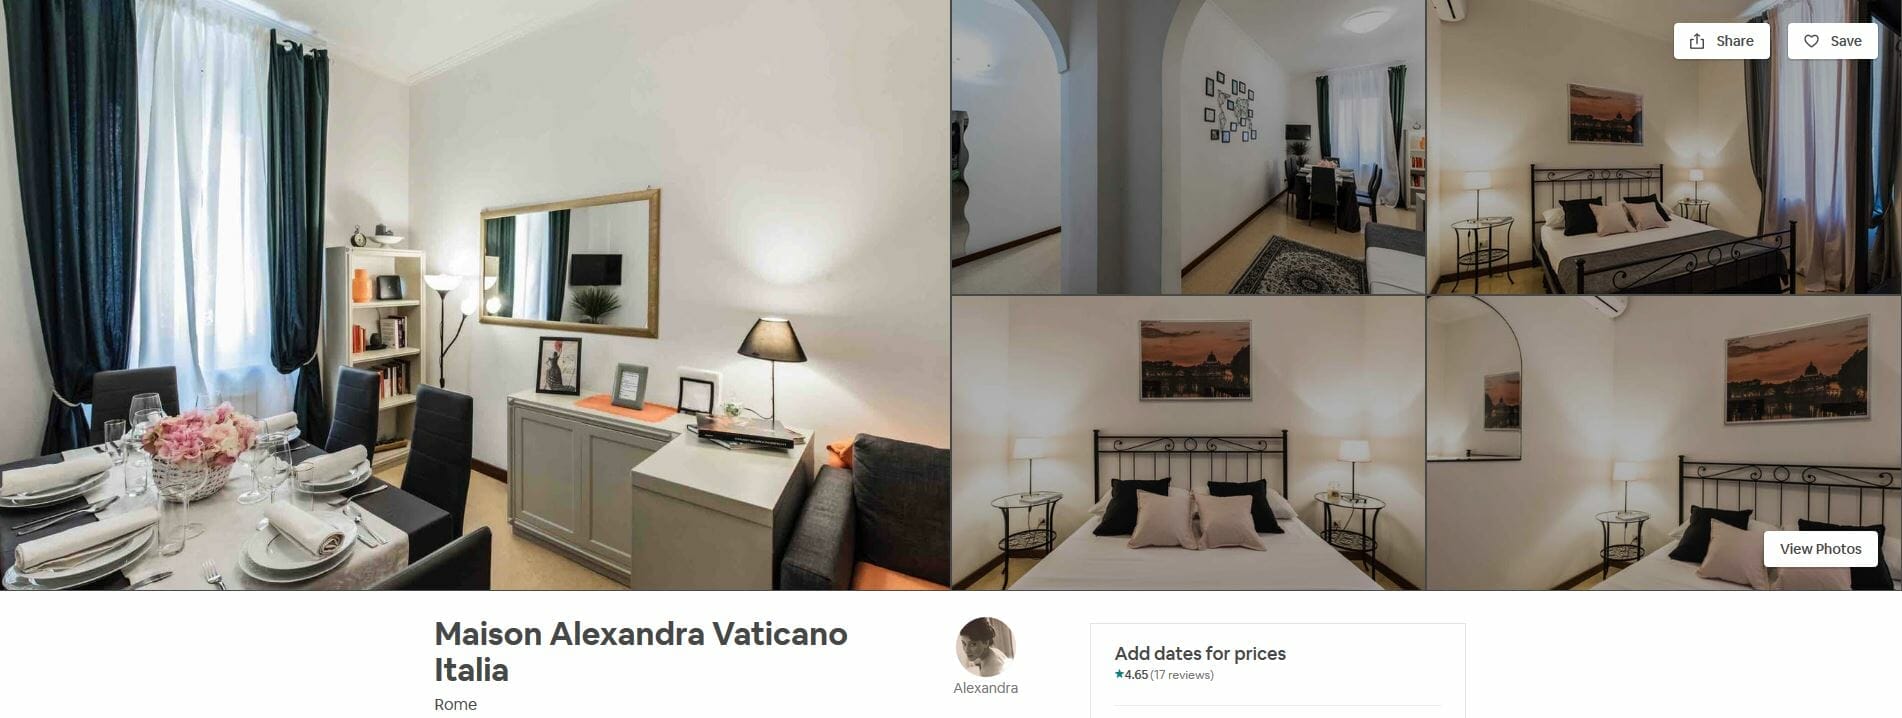 best airbnbs rome Maison Alexandra Vaticano